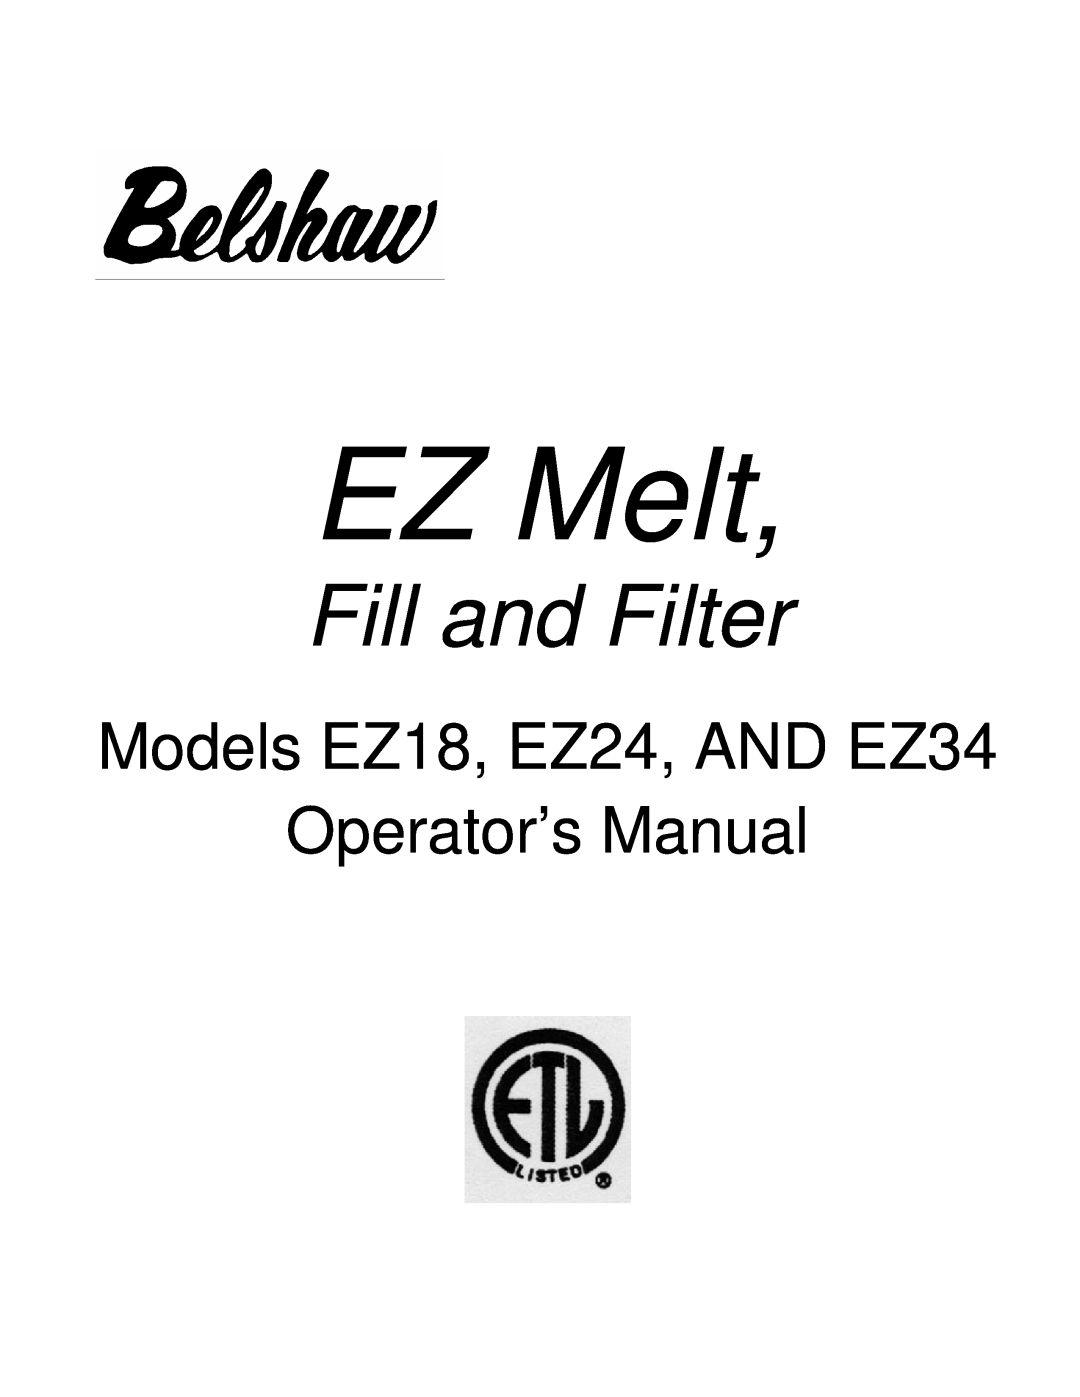 Belshaw Brothers manual Models EZ18, EZ24, AND EZ34 Operator’s Manual, EZ Melt, Fill and Filter 